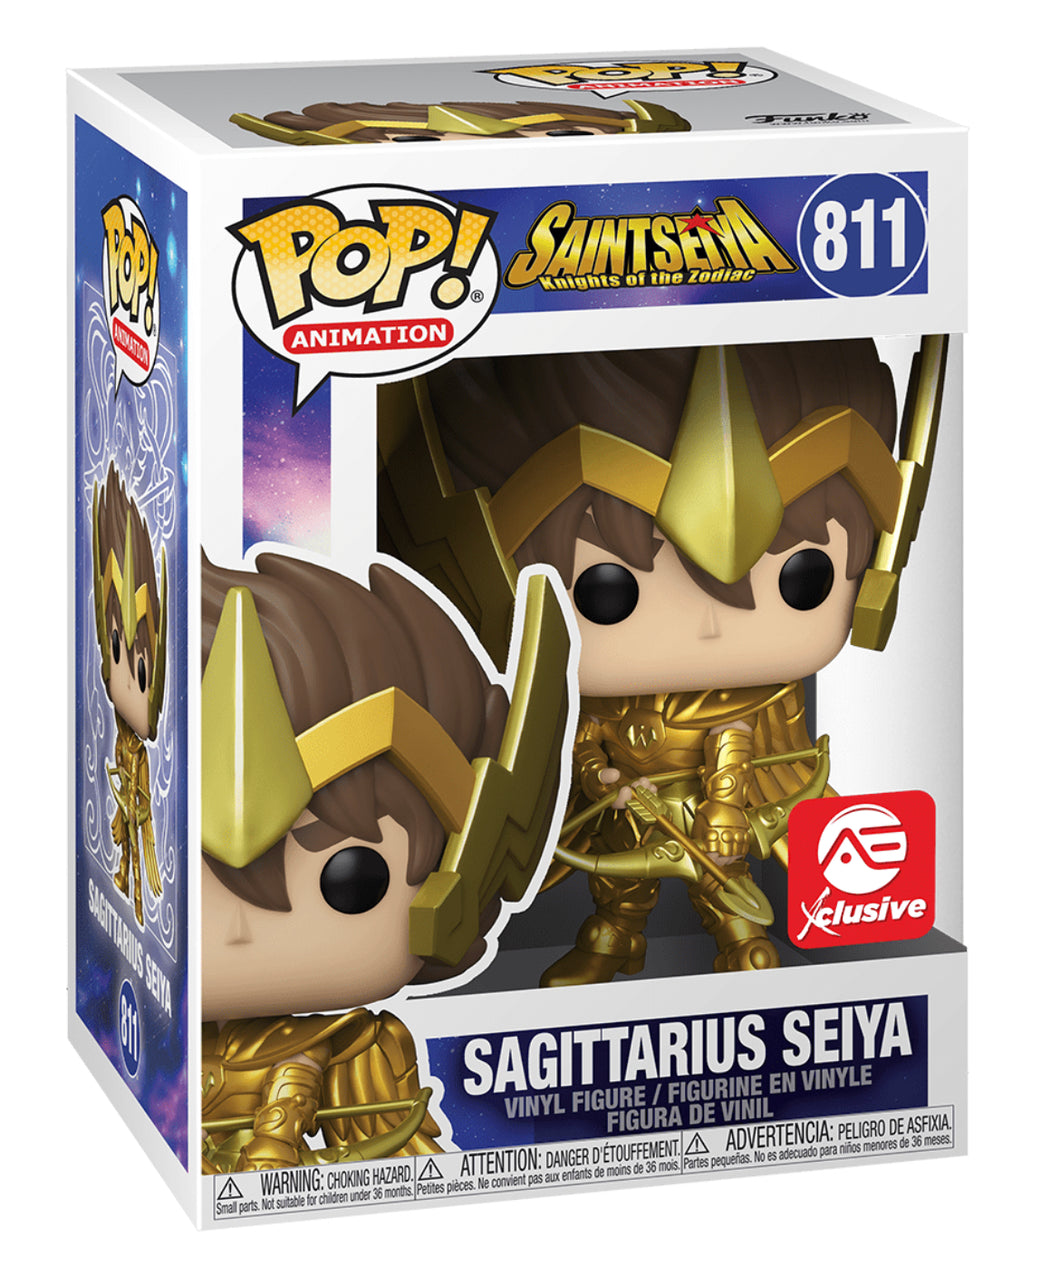 POP! Animation: 811 Saint Seiya, Sagittarius Seiya Exclusive